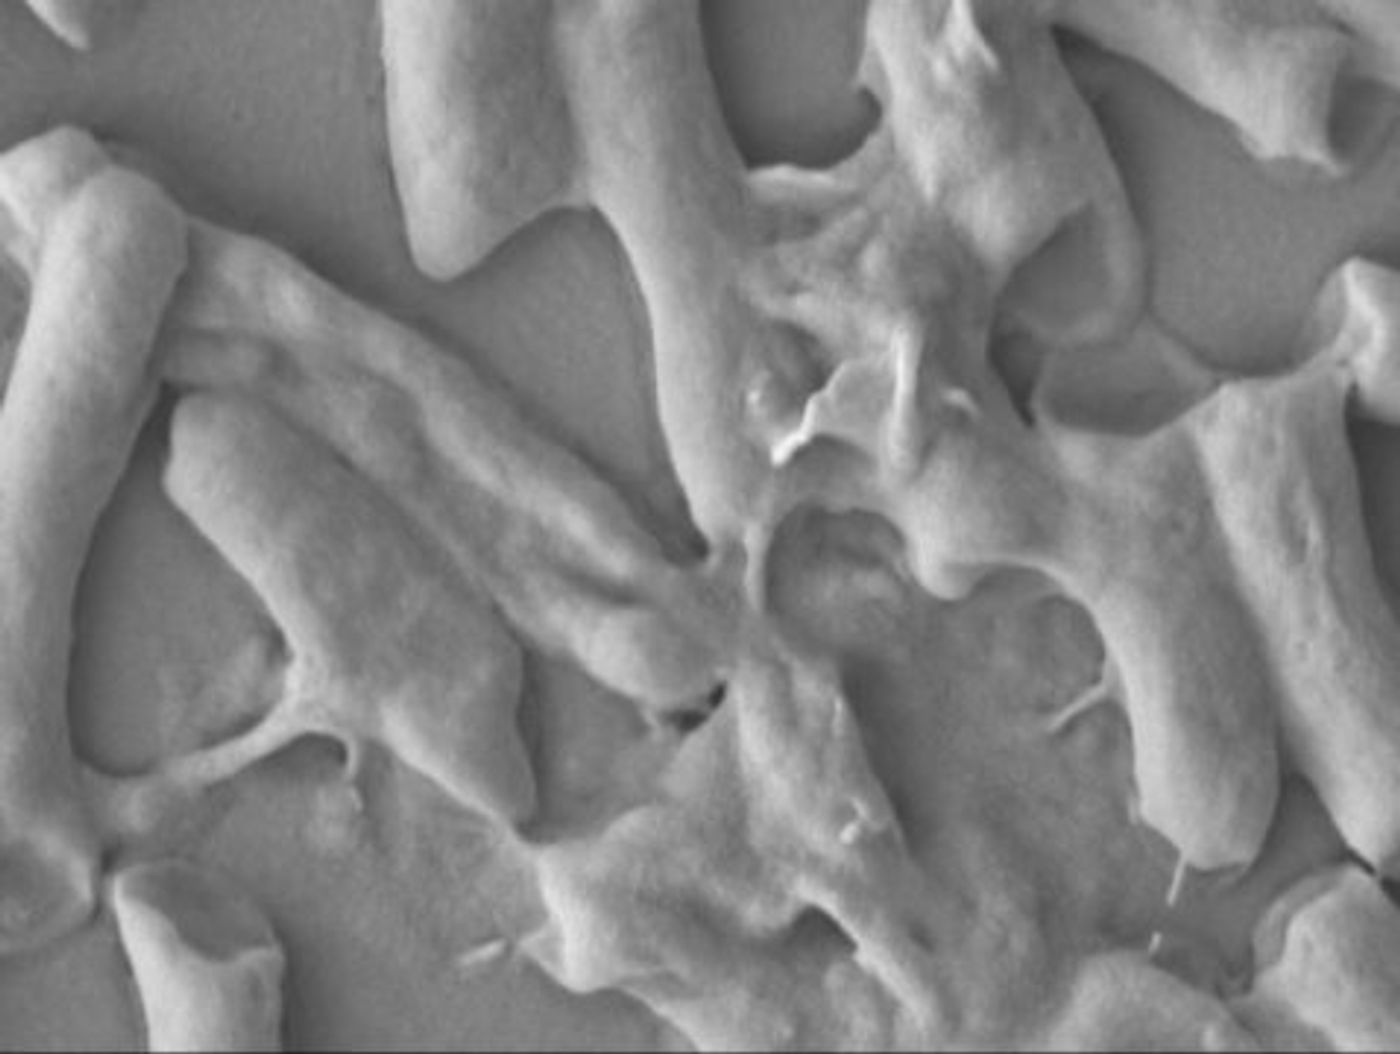 E. coli after treatment with the new imidazolium oligomer. Image: Institute of Bioengineering and Nanotechnology